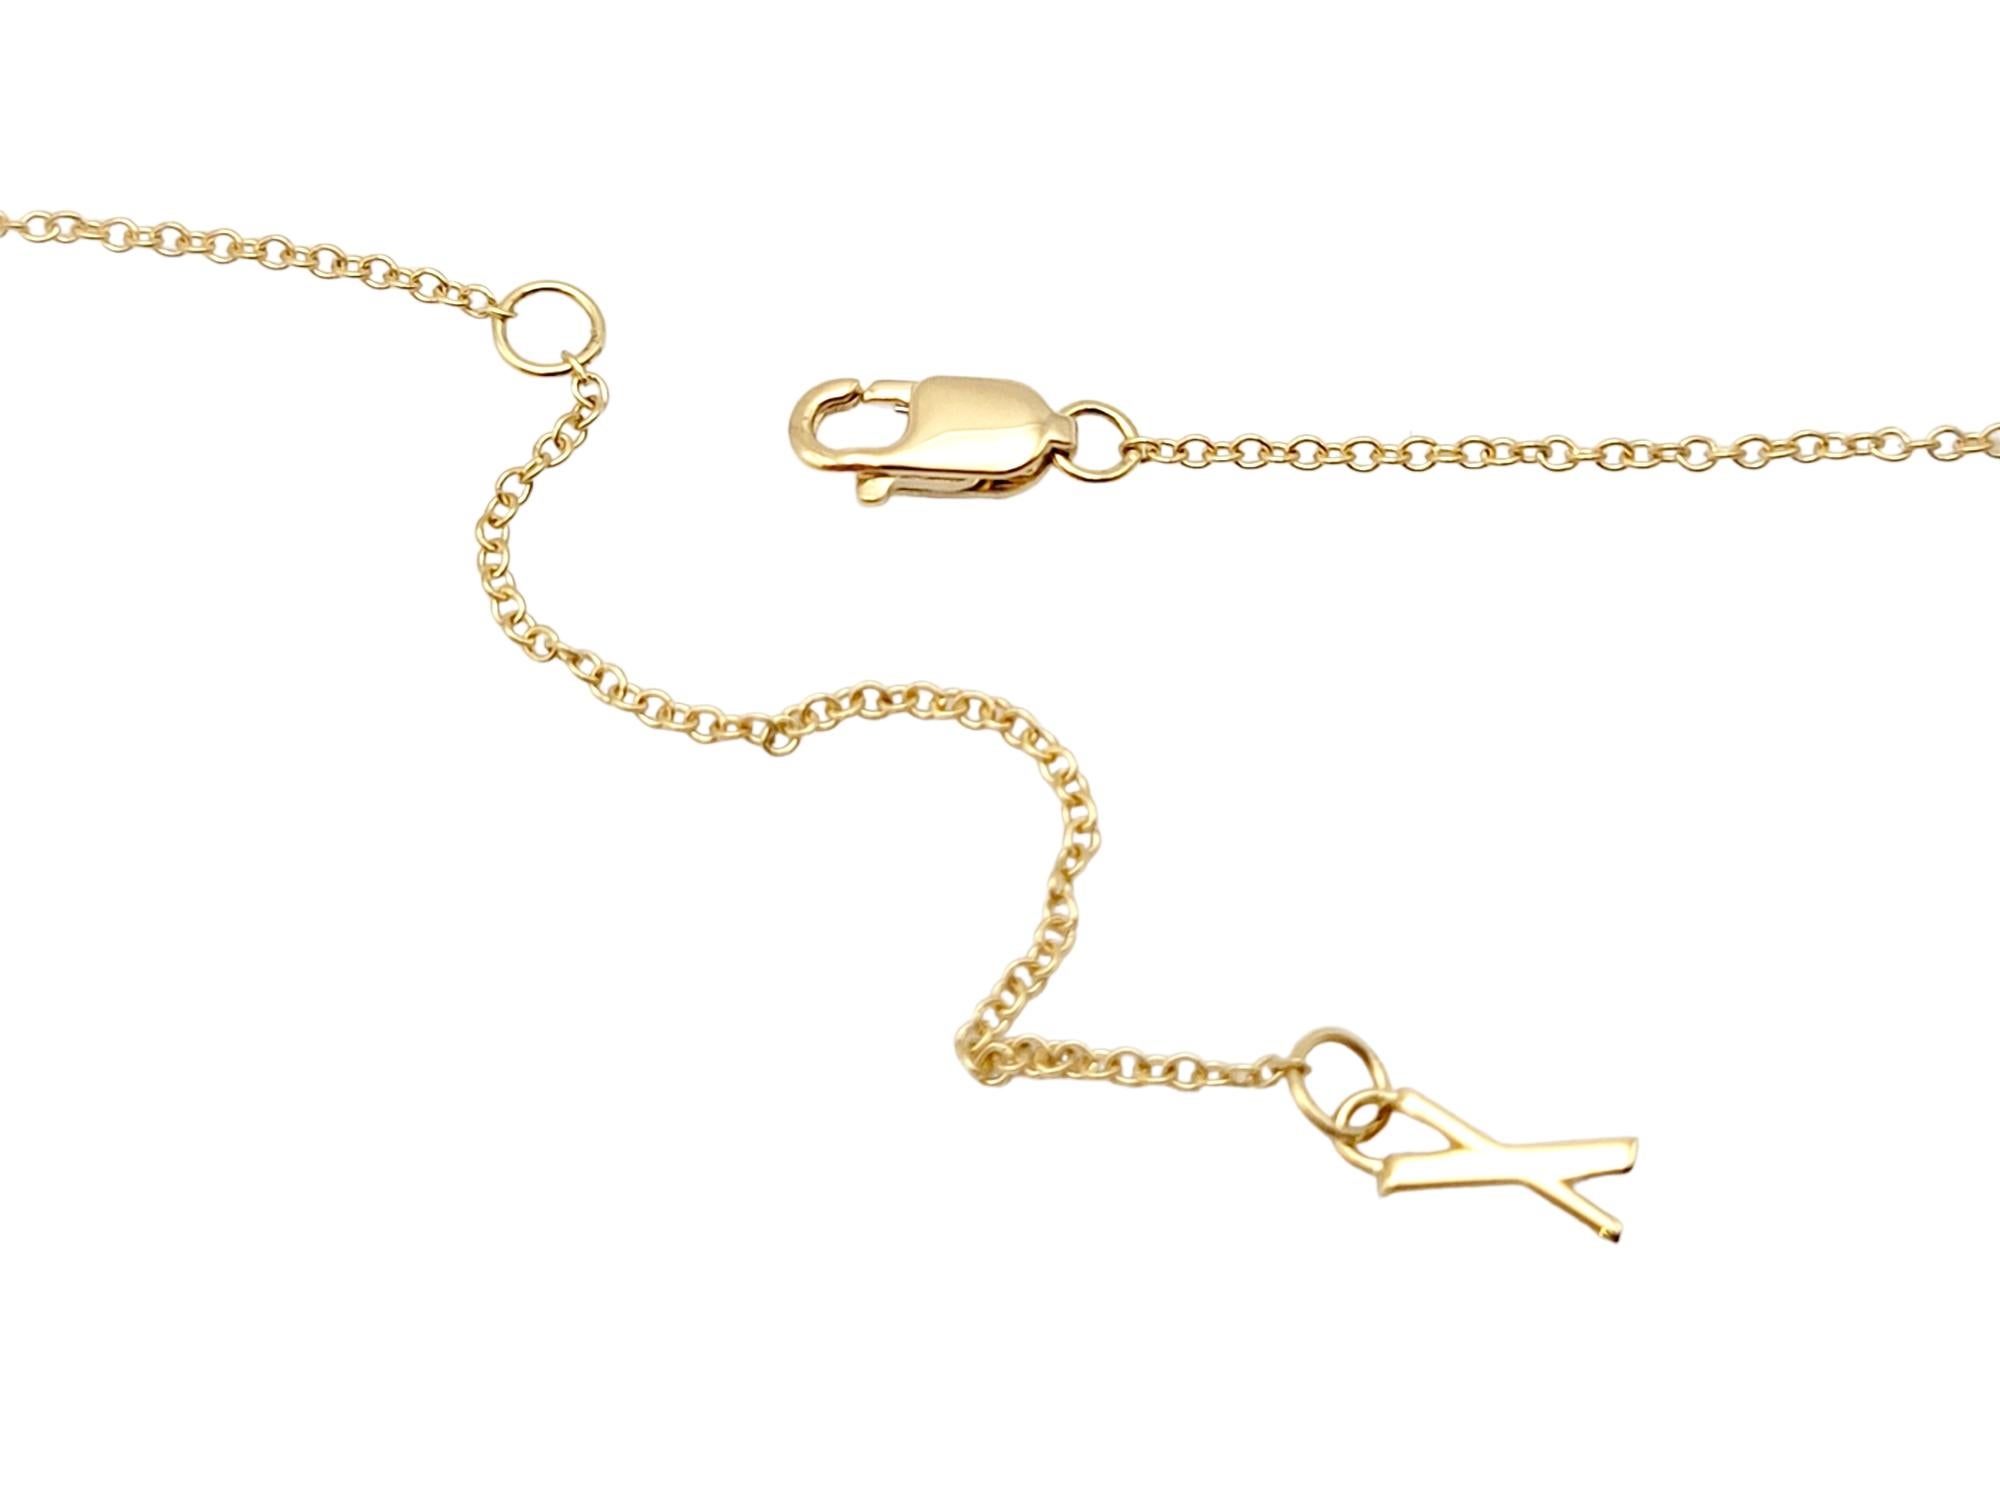 Tiffany & Co. Atlas, collier pendentif en or jaune 18 carats avec pendentif imbriqué en forme de X 5